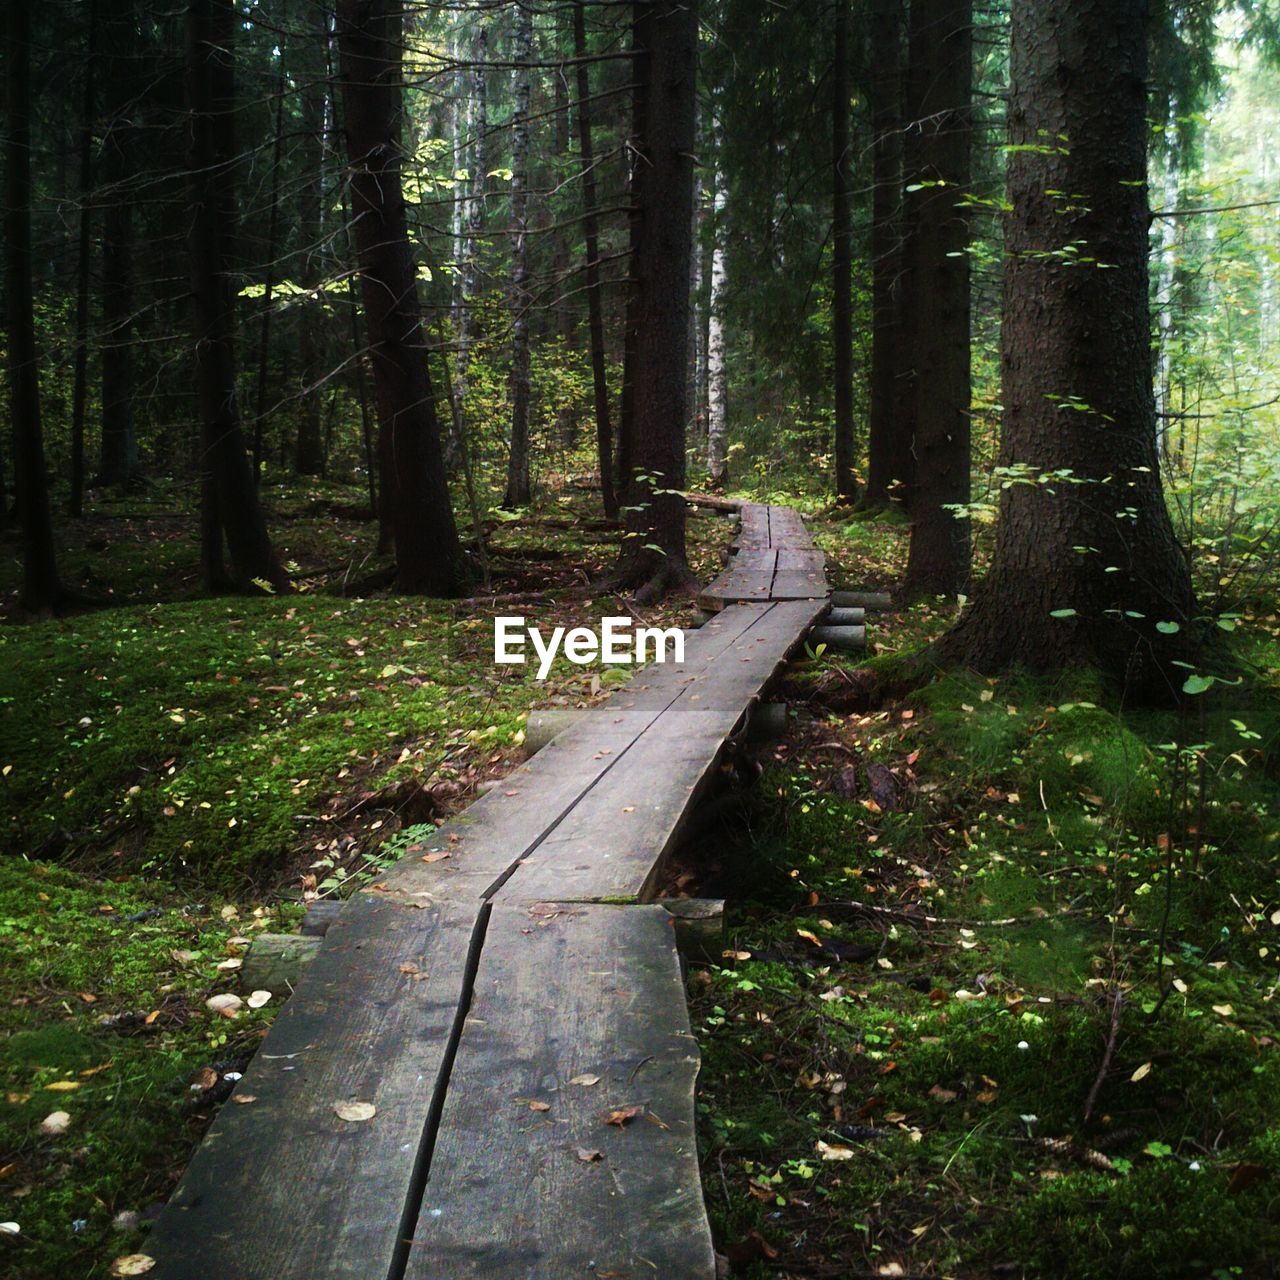 Narrow wooden walkway in forest